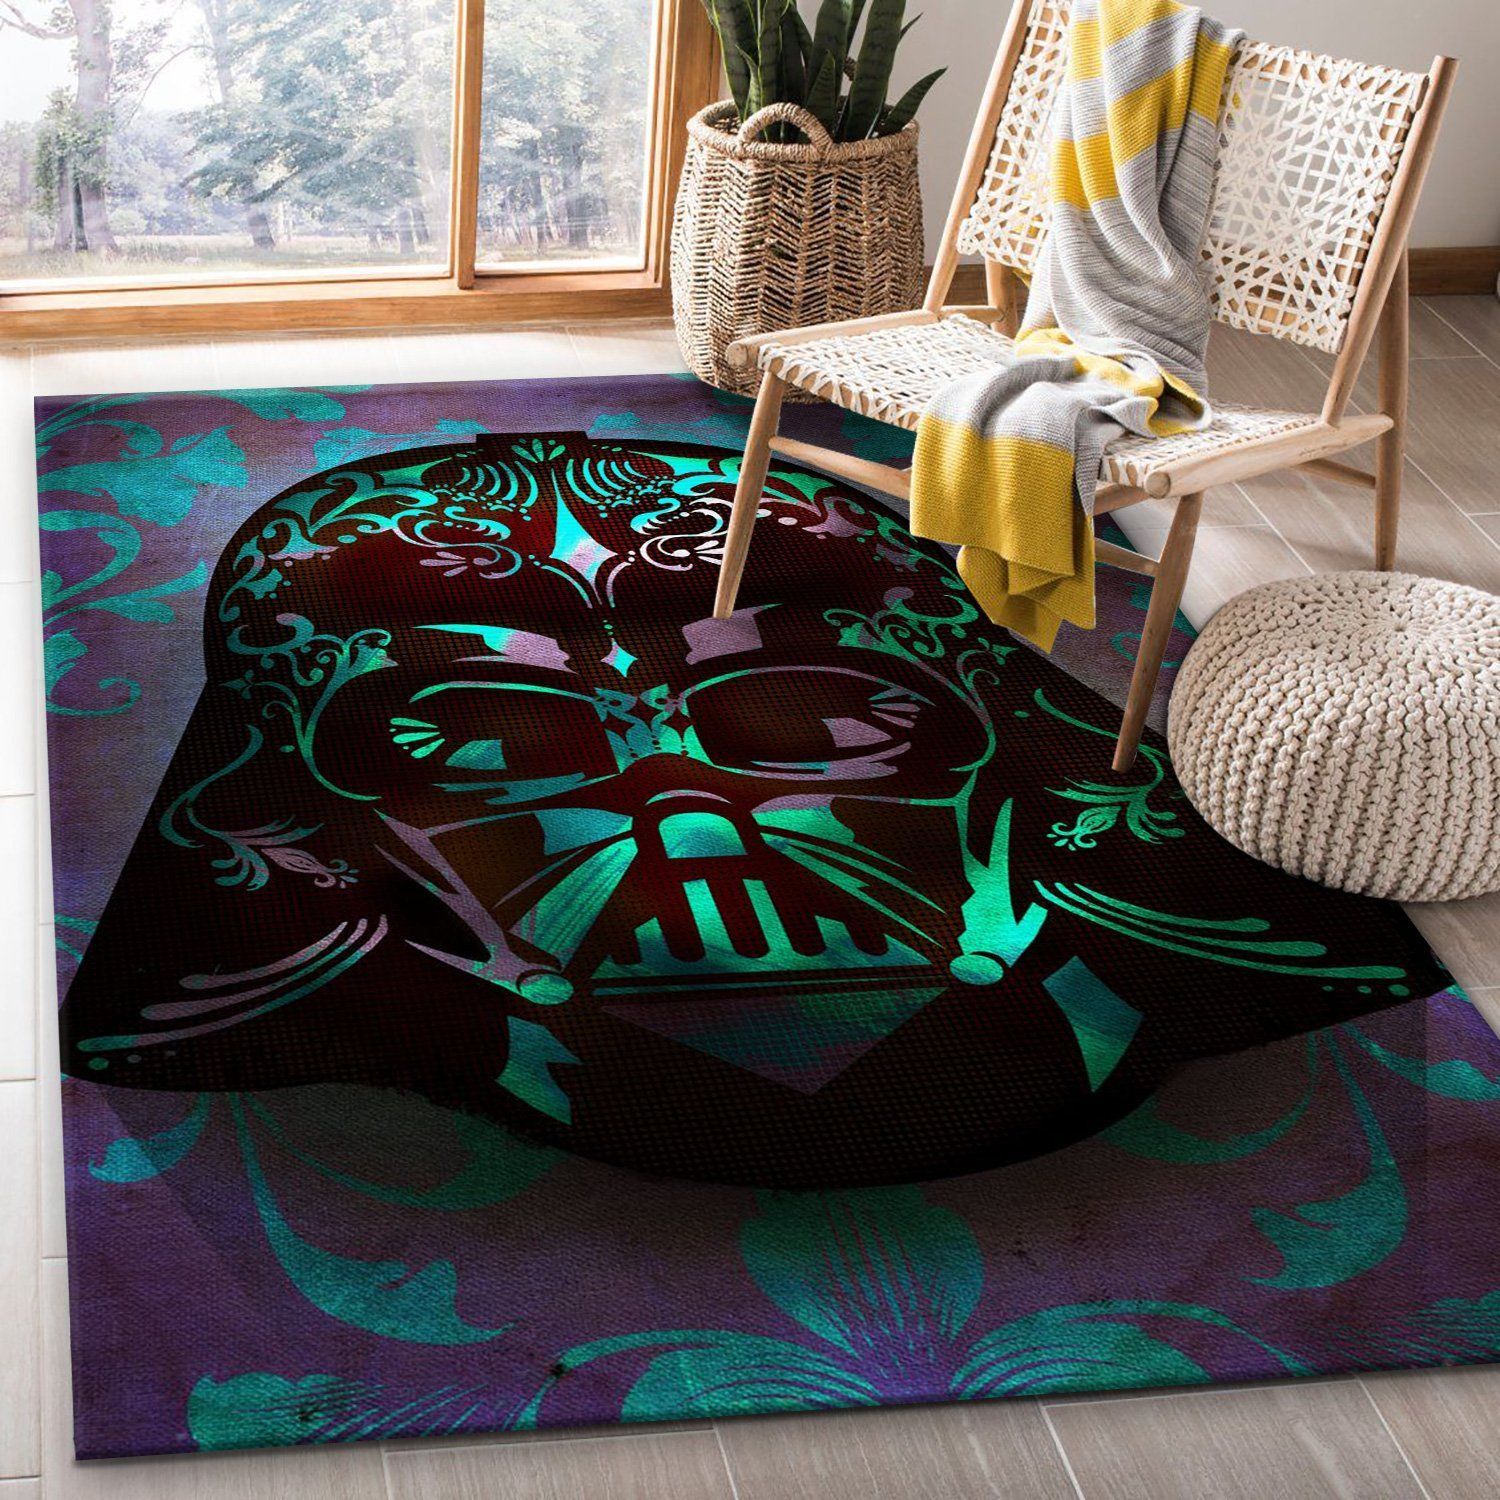 Vader Fluid Rug Star Wars Visions Of Darth Vader Rug Home Decor Floor Decor - Indoor Outdoor Rugs